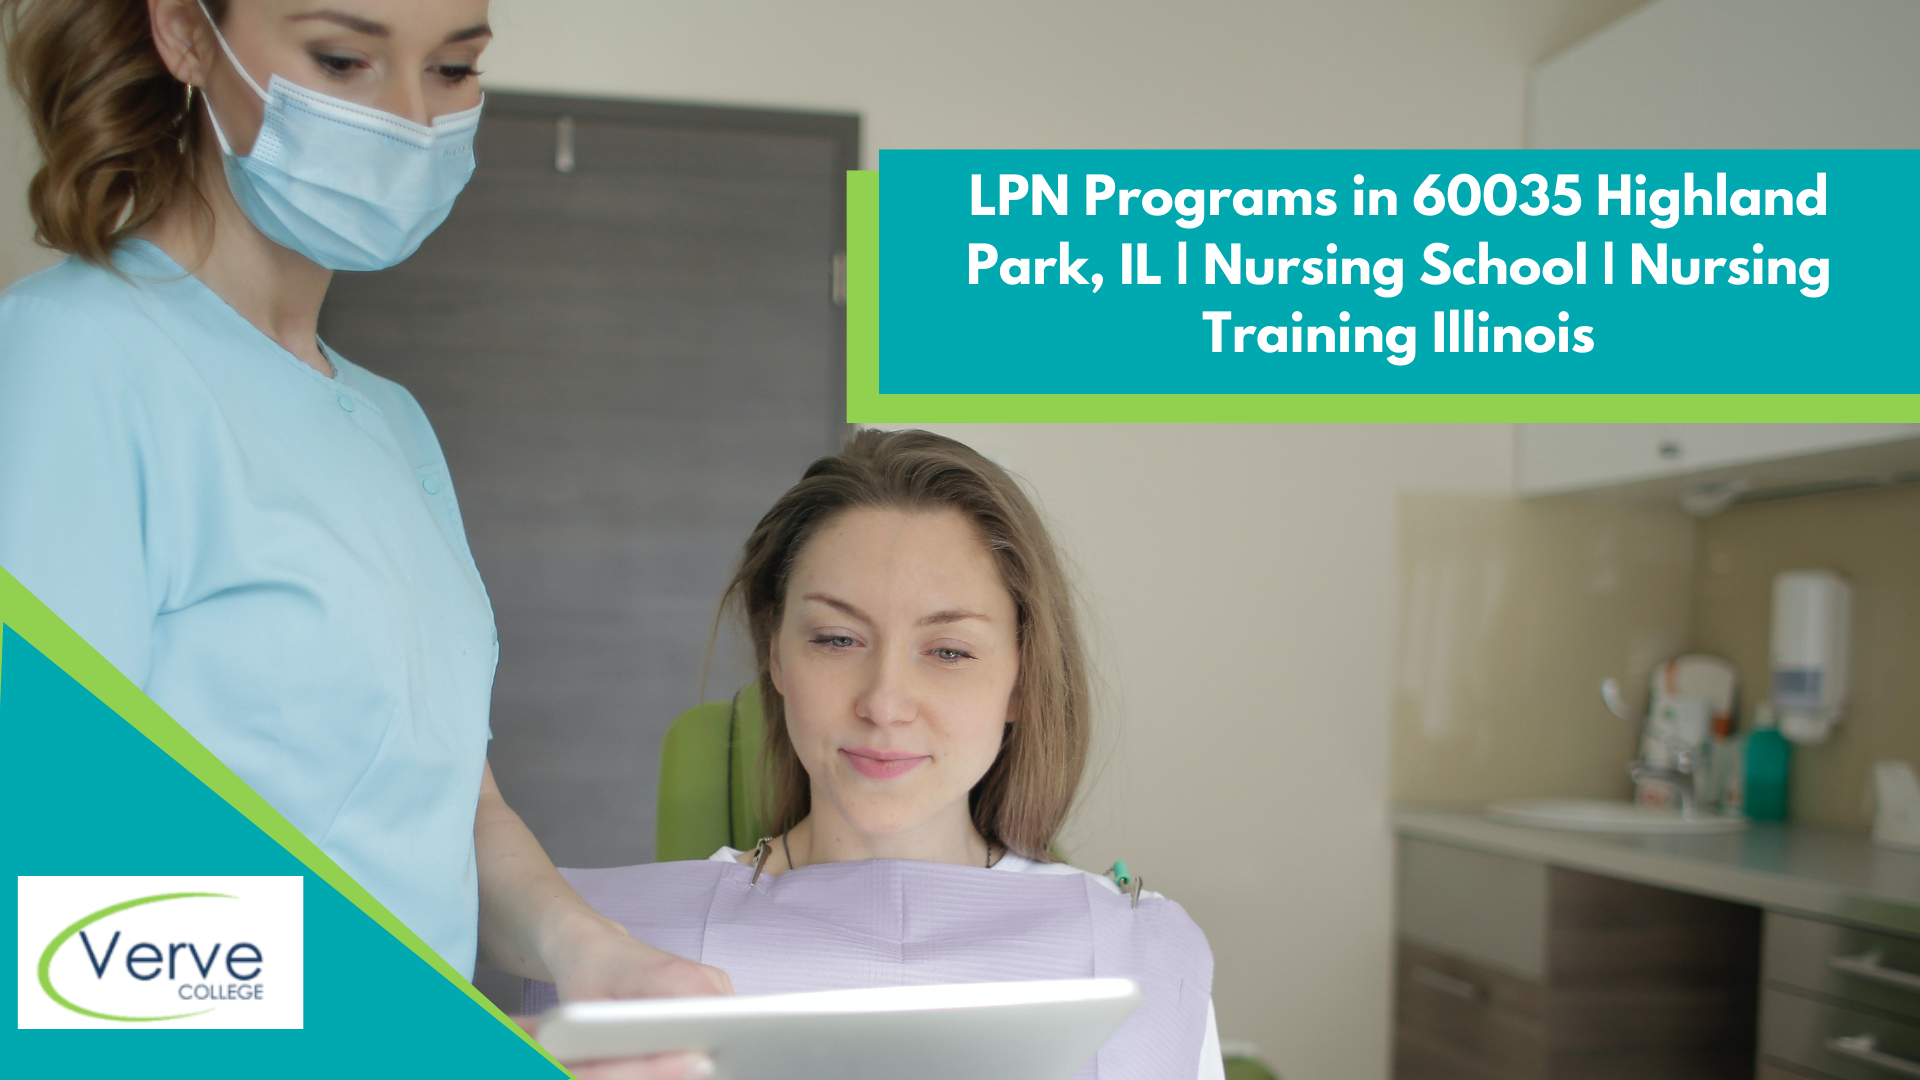 LPN Programs in 60035 Highland Park, IL | Nursing School | Nursing Training Illinois